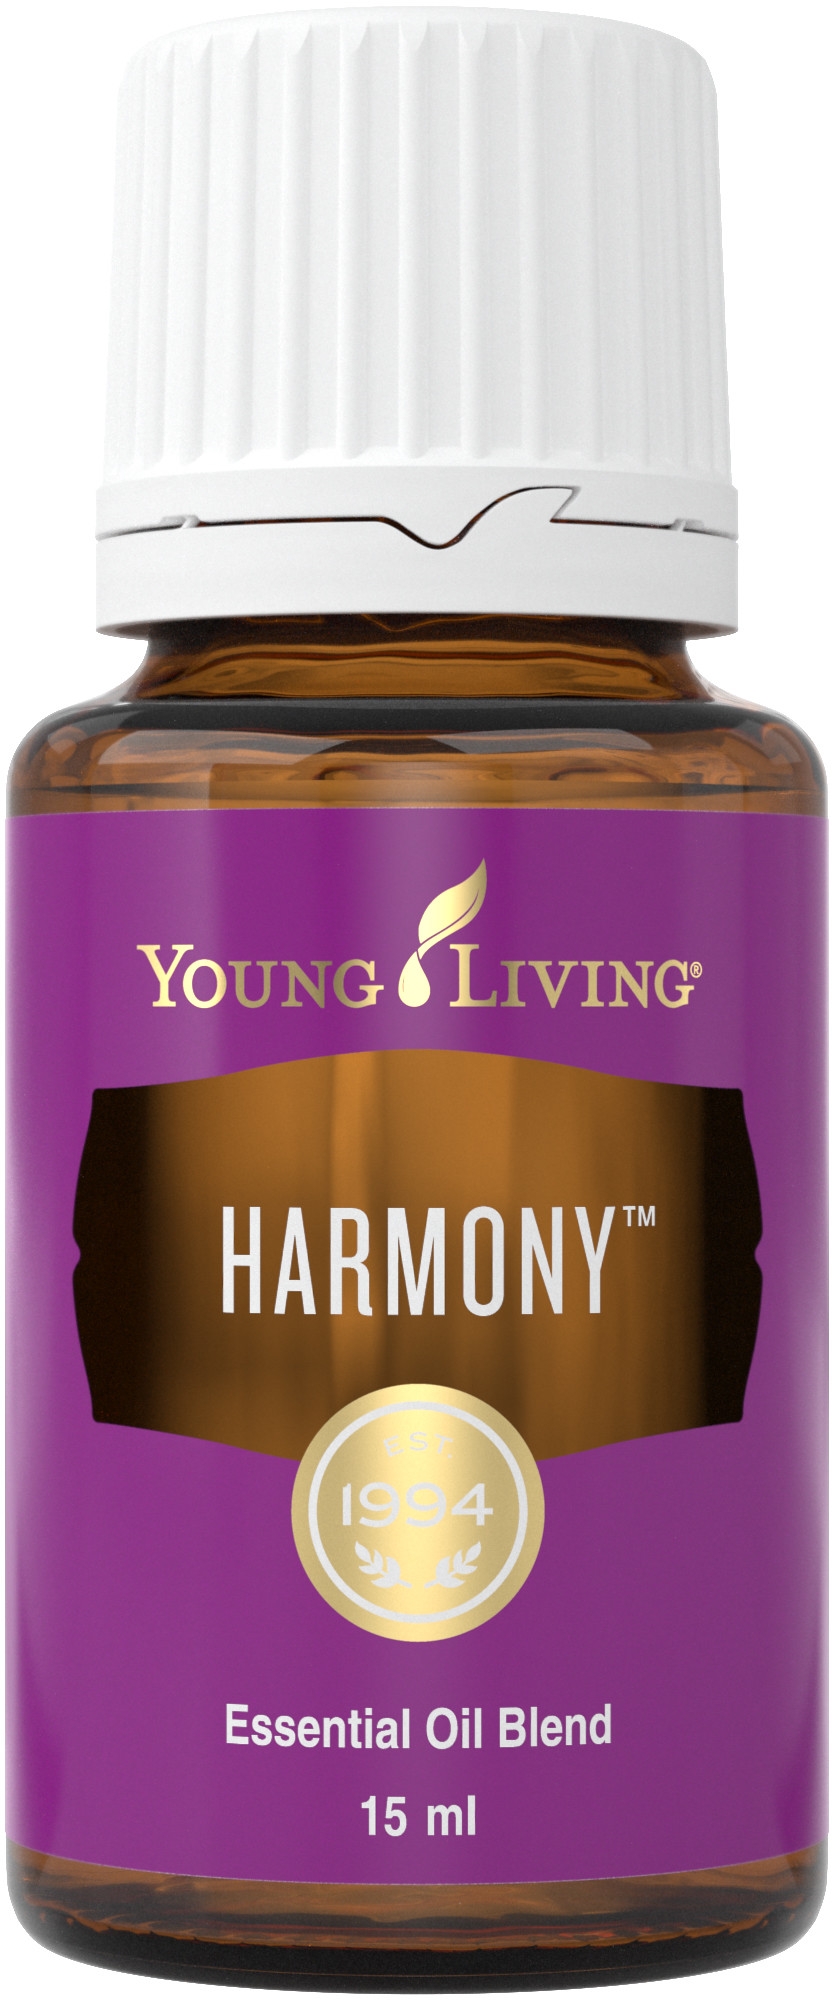 harmony-young-living-therische-lmischung-als-kosmetisches-mittel